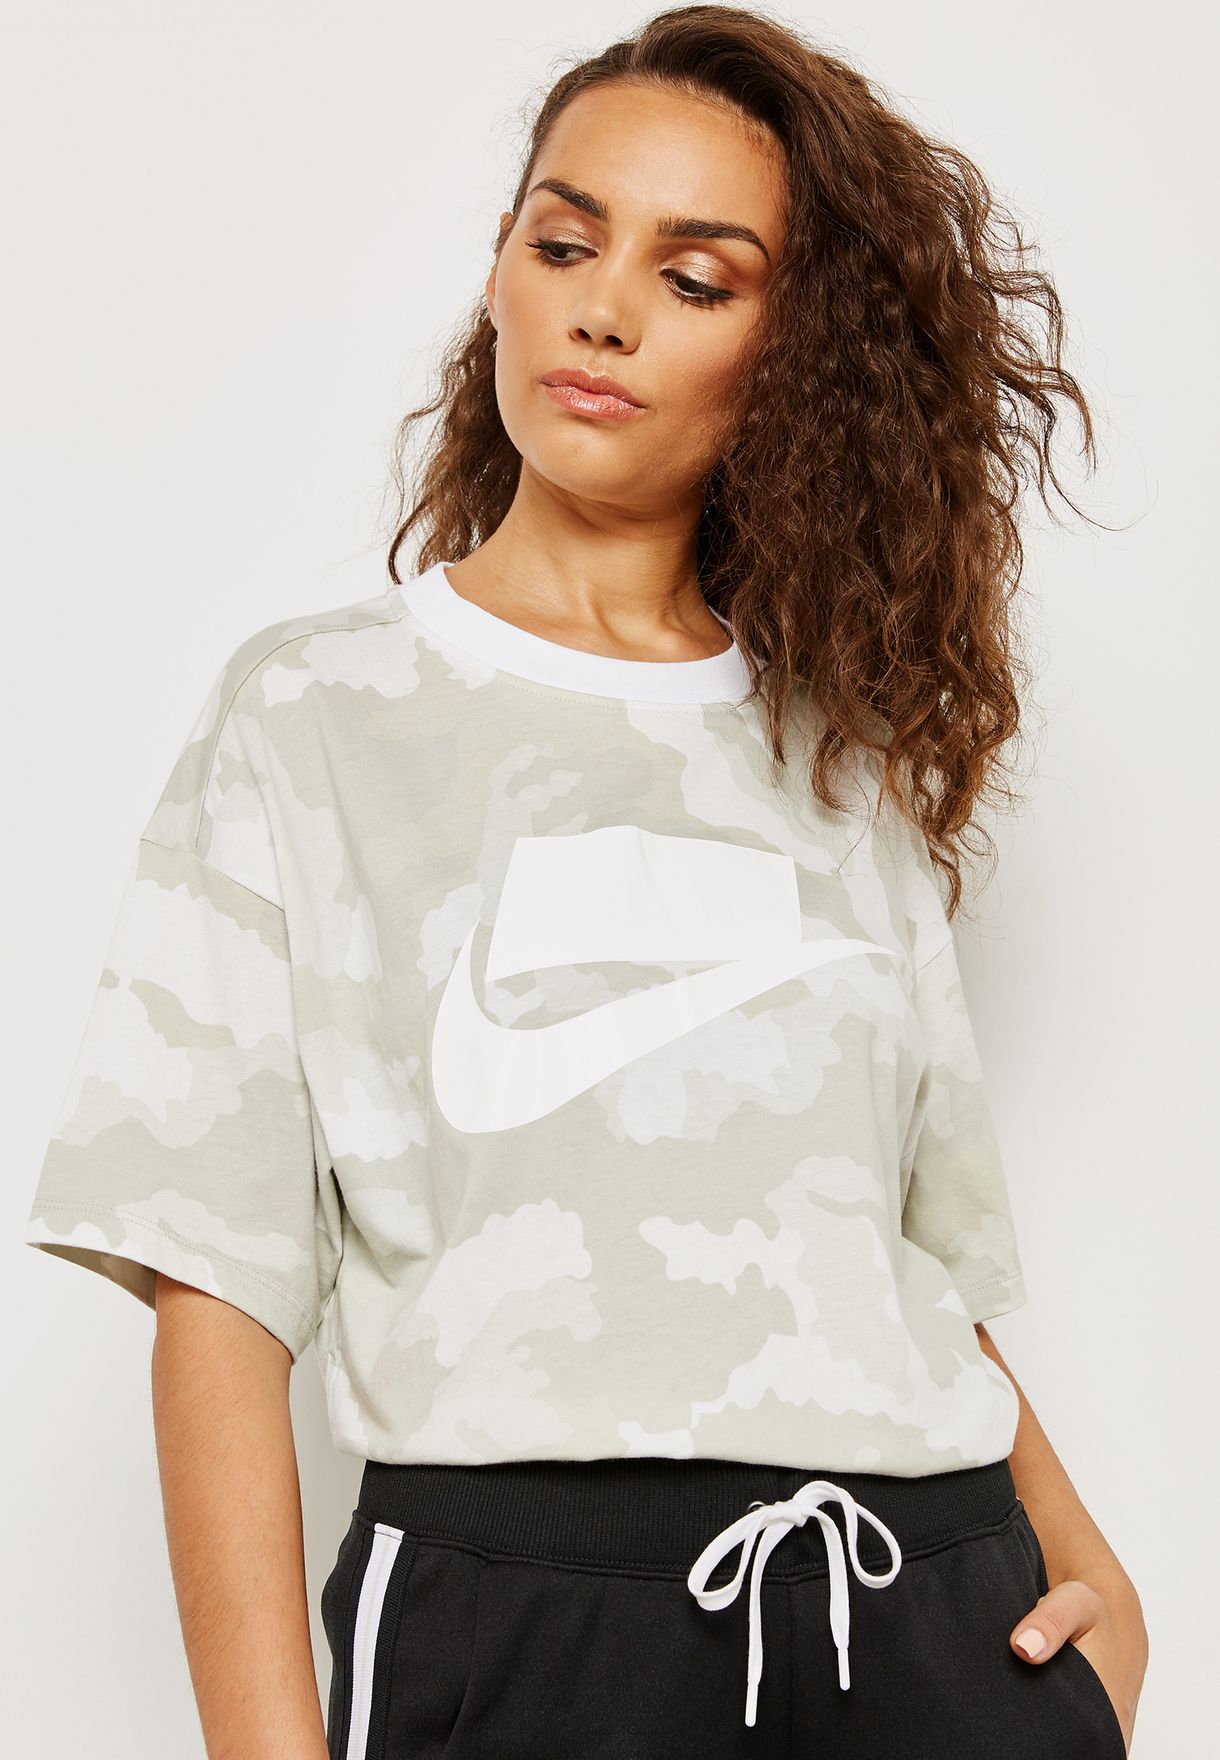 Buy Nike prints NSW Camo T-Shirt for 